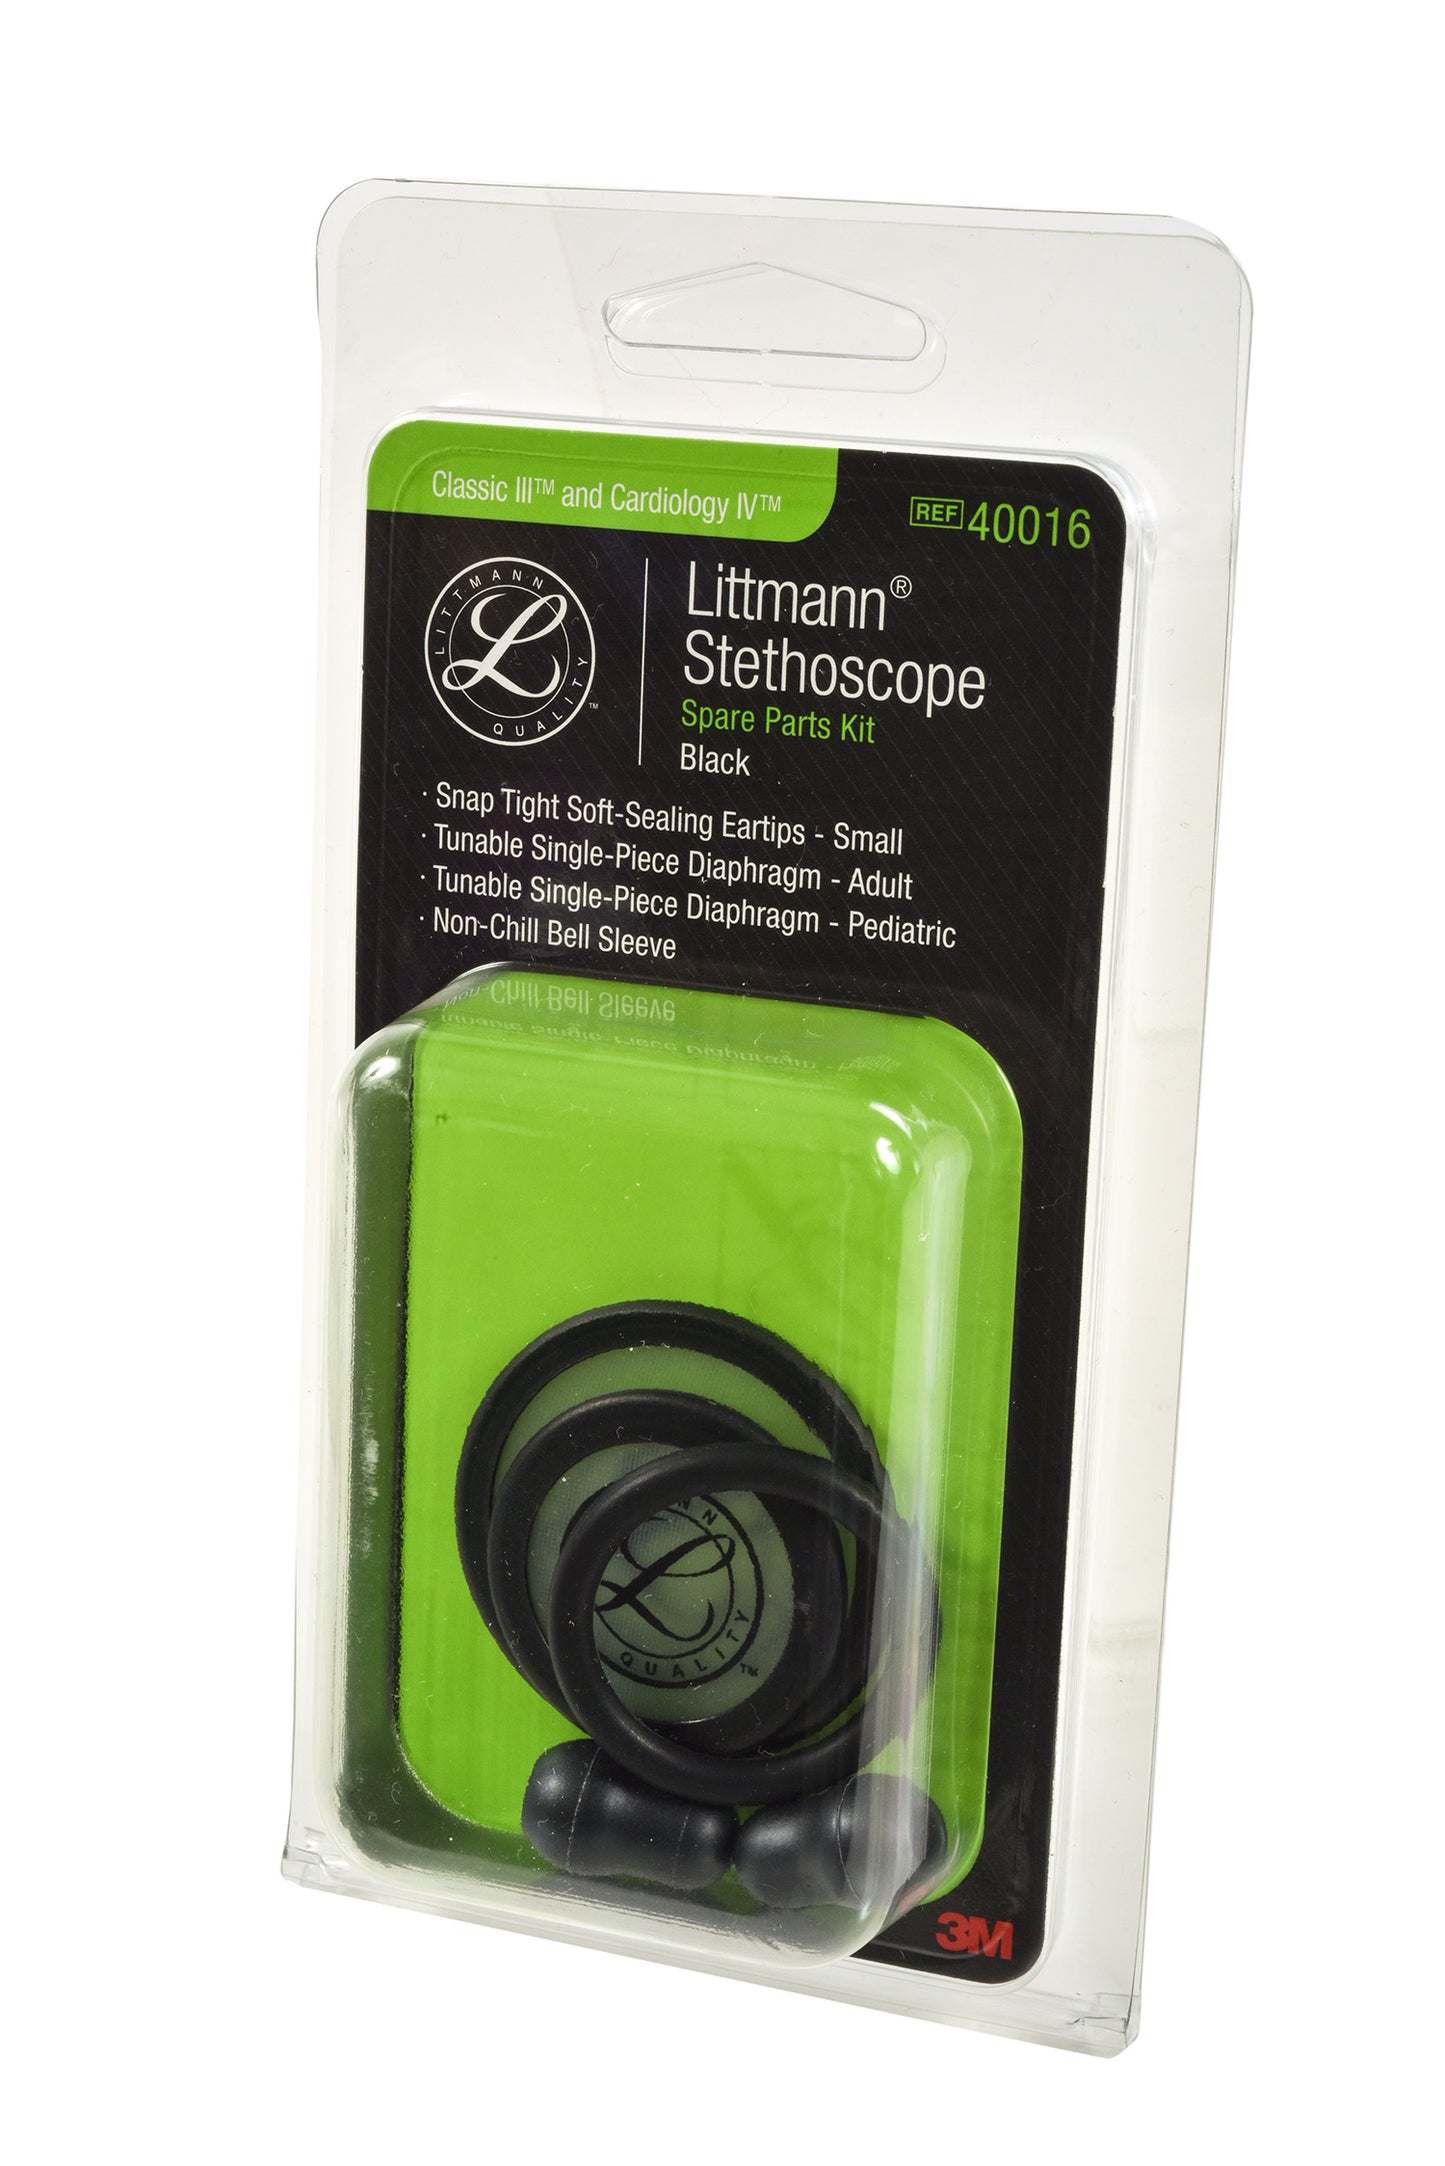 3M Littmann Stethoscope Spare Parts Kit - CORE Digital/Classic III/Cardiology IV - Black Littmann Spare Parts 3M Littmann   